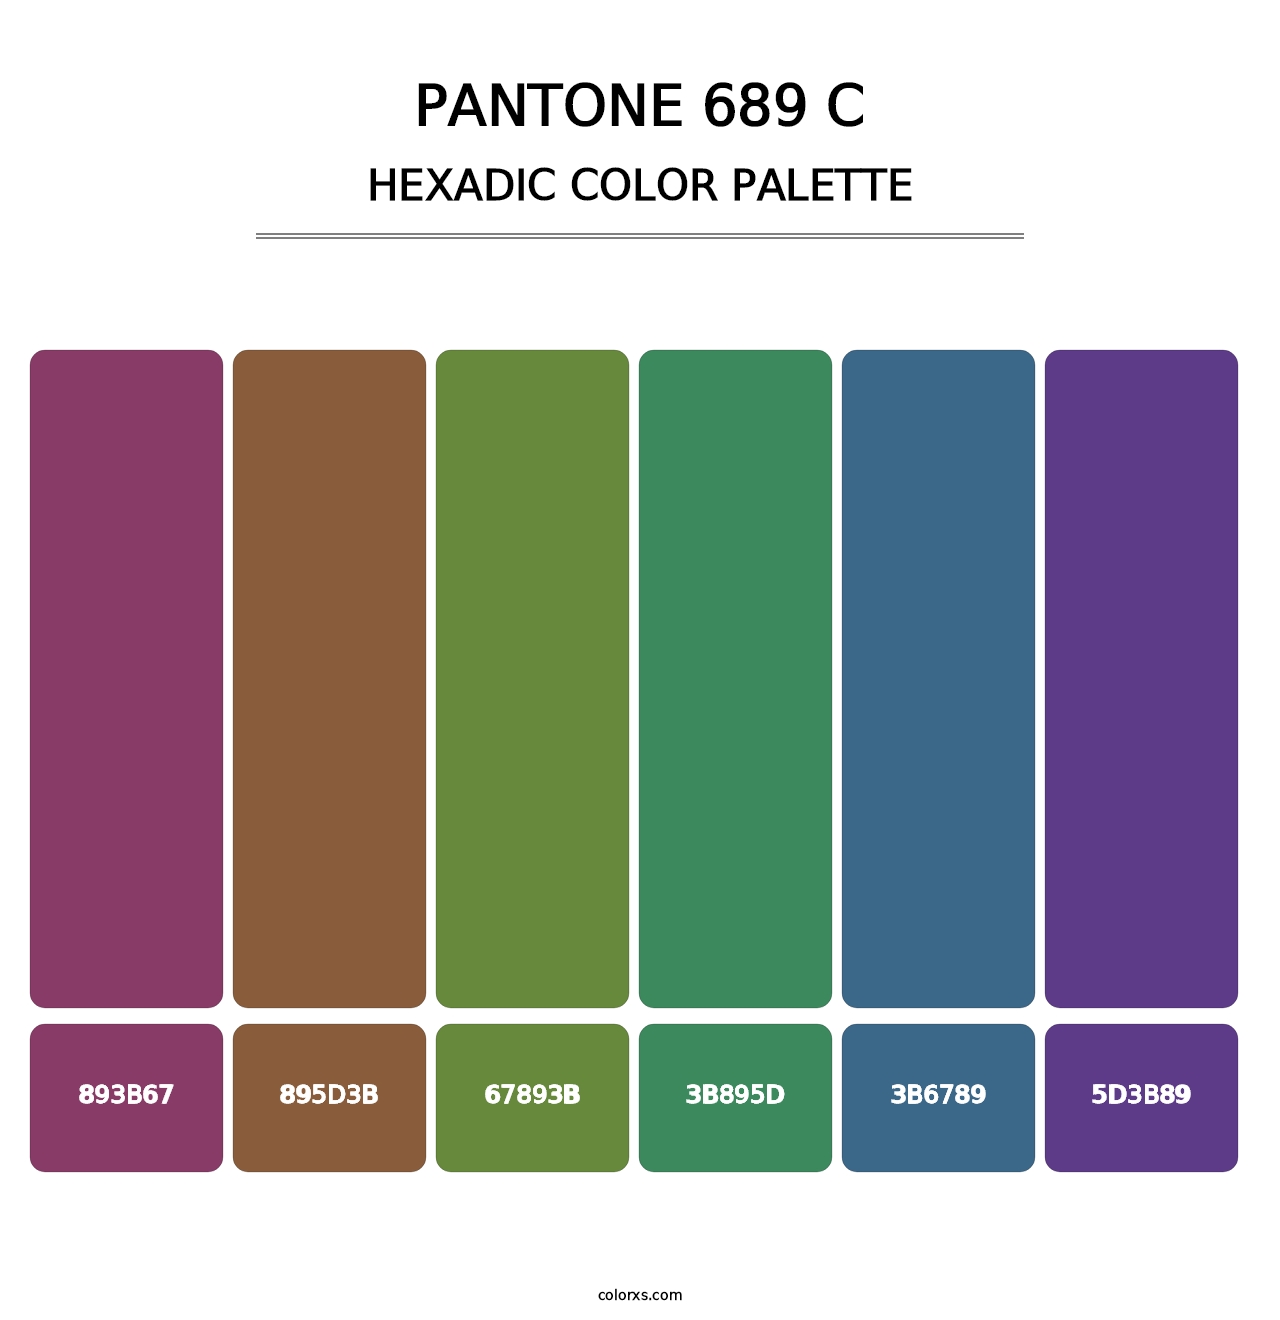 PANTONE 689 C - Hexadic Color Palette